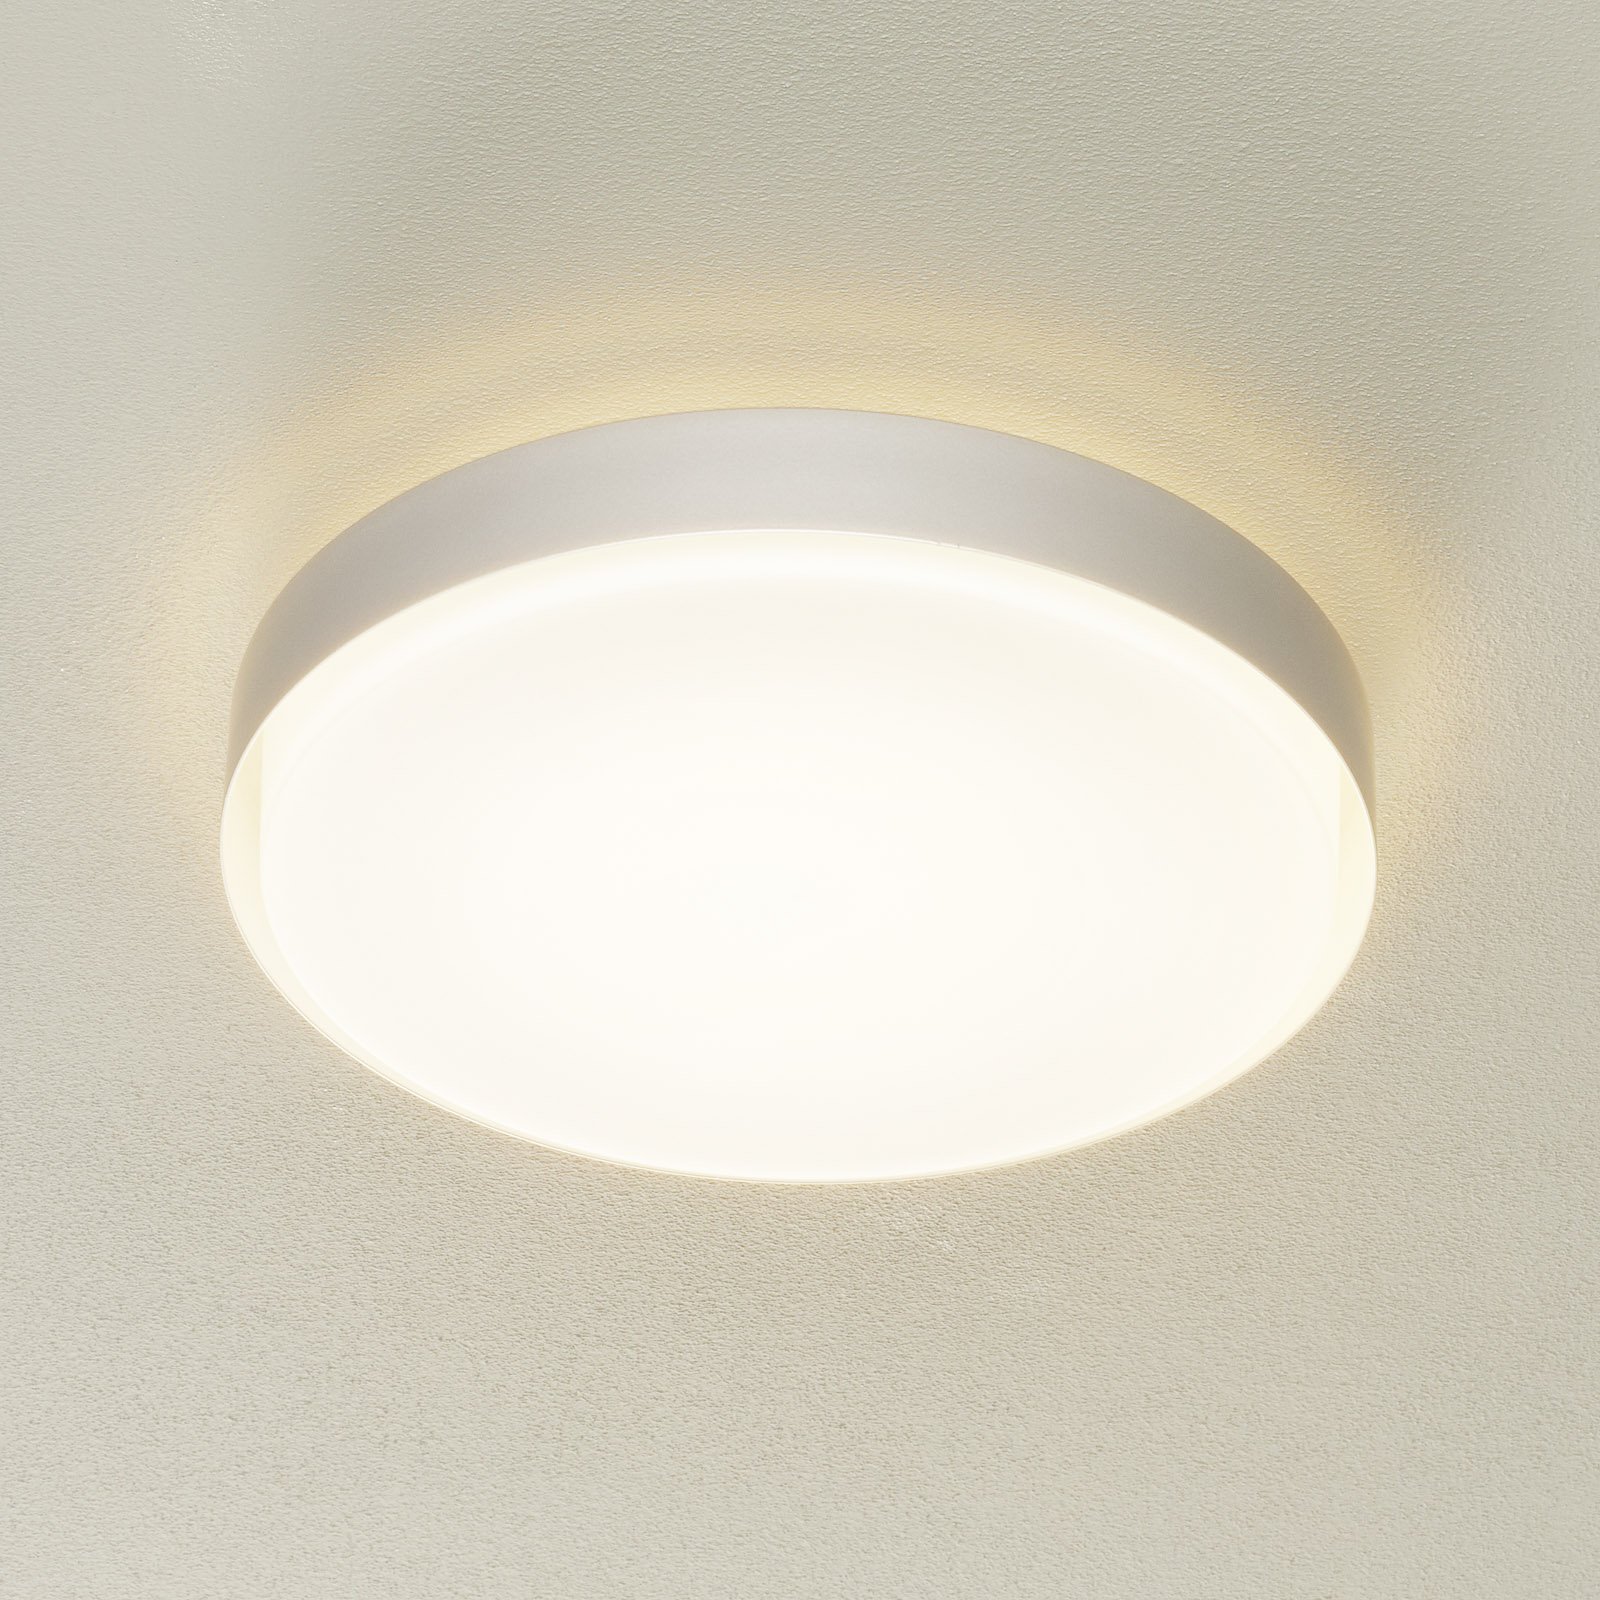 BEGA 34279 LED-kattovalaisin, alumiini, Ø 42 cm